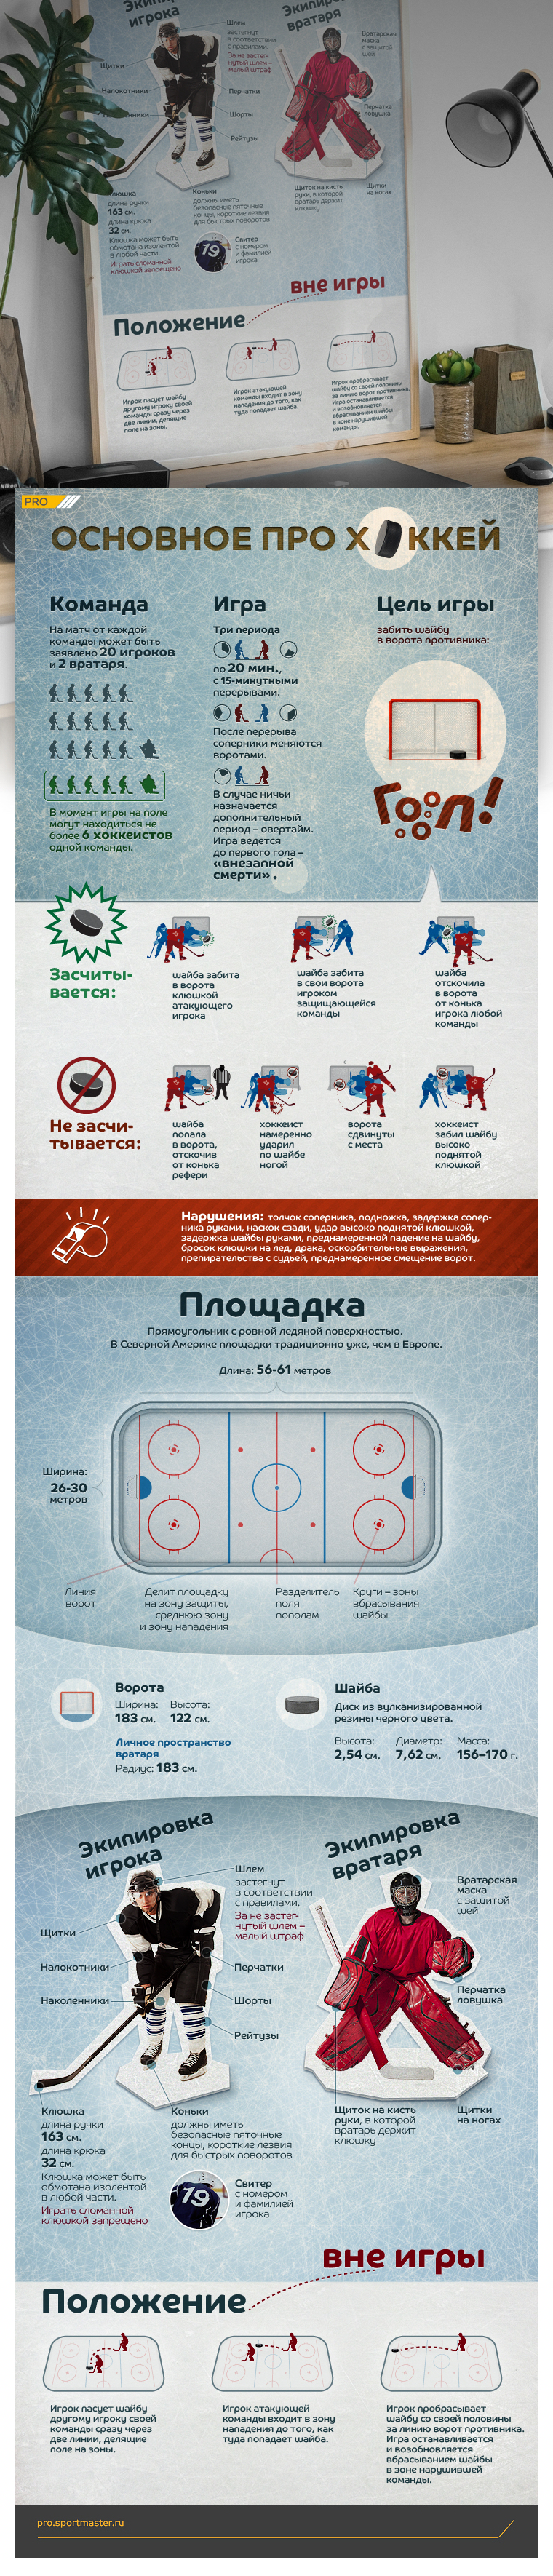 Эскиз проекта Infographic poster "Basic about hockey"